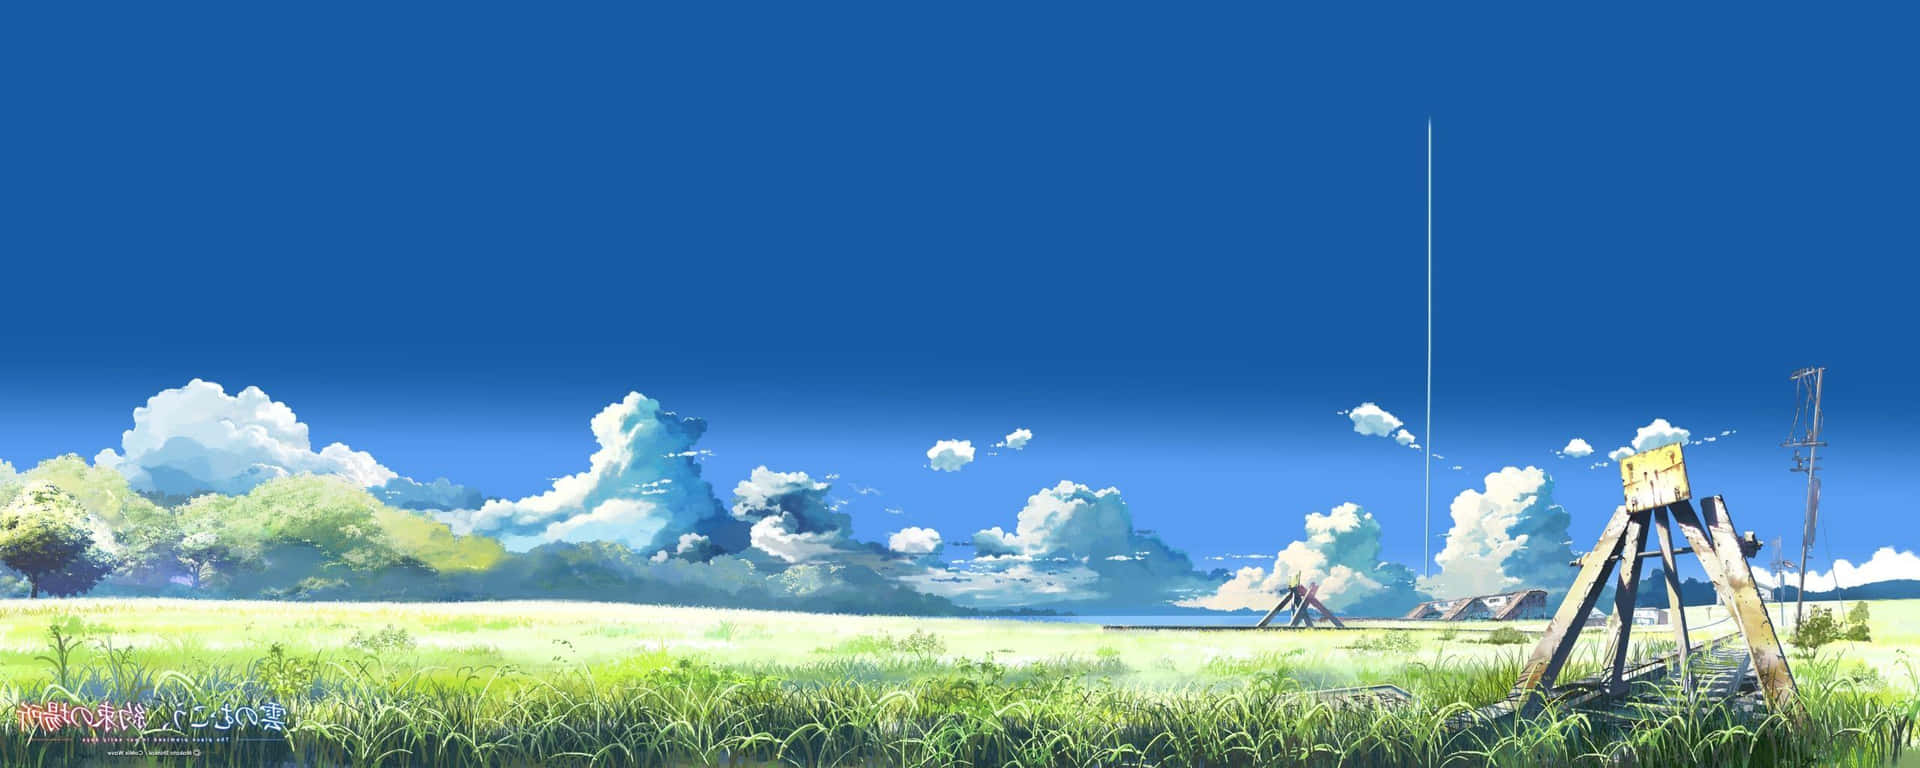 “The work of Makoto Shinkai, a renowned filmmaker.”